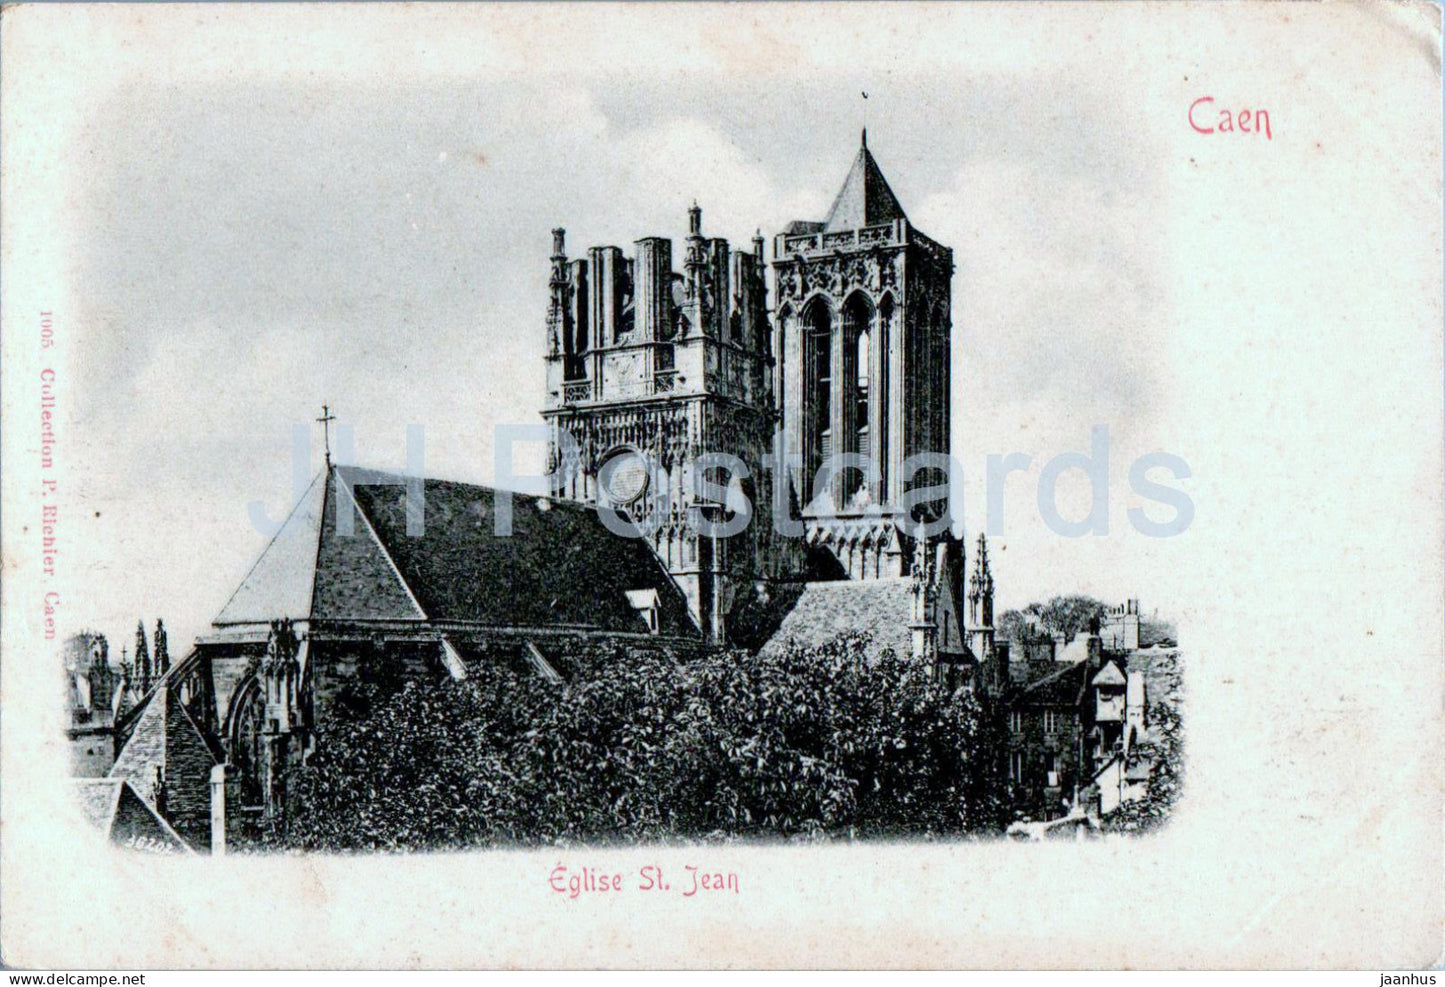 Caen - Eglise St Jean - church - 1005 - old postcard - France - unused - JH Postcards